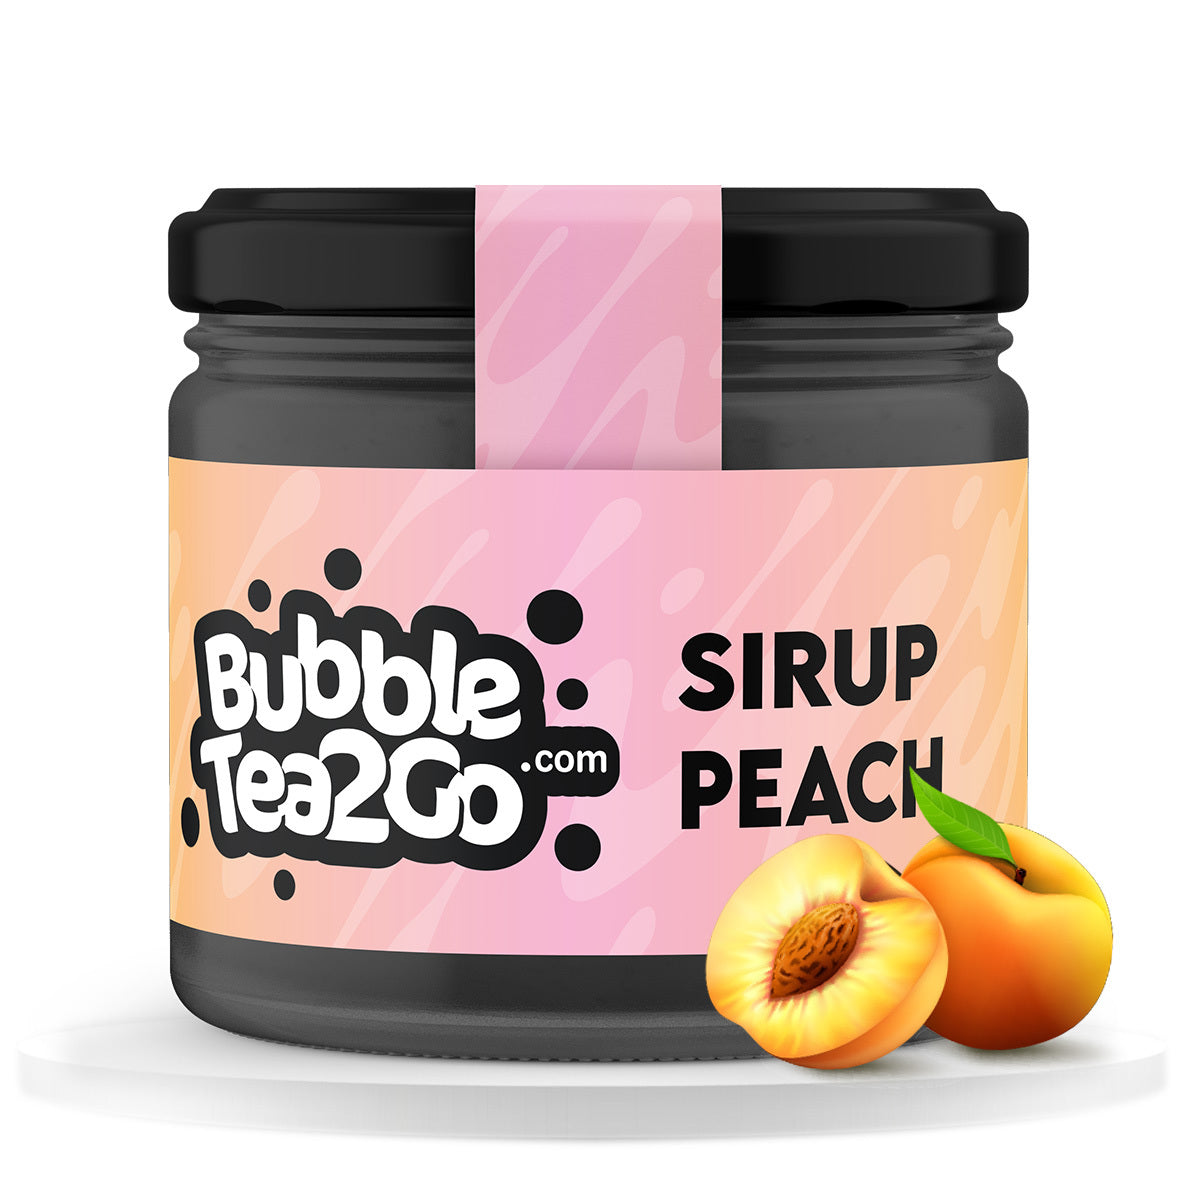 Sirop - Peach 2 portions (50g)